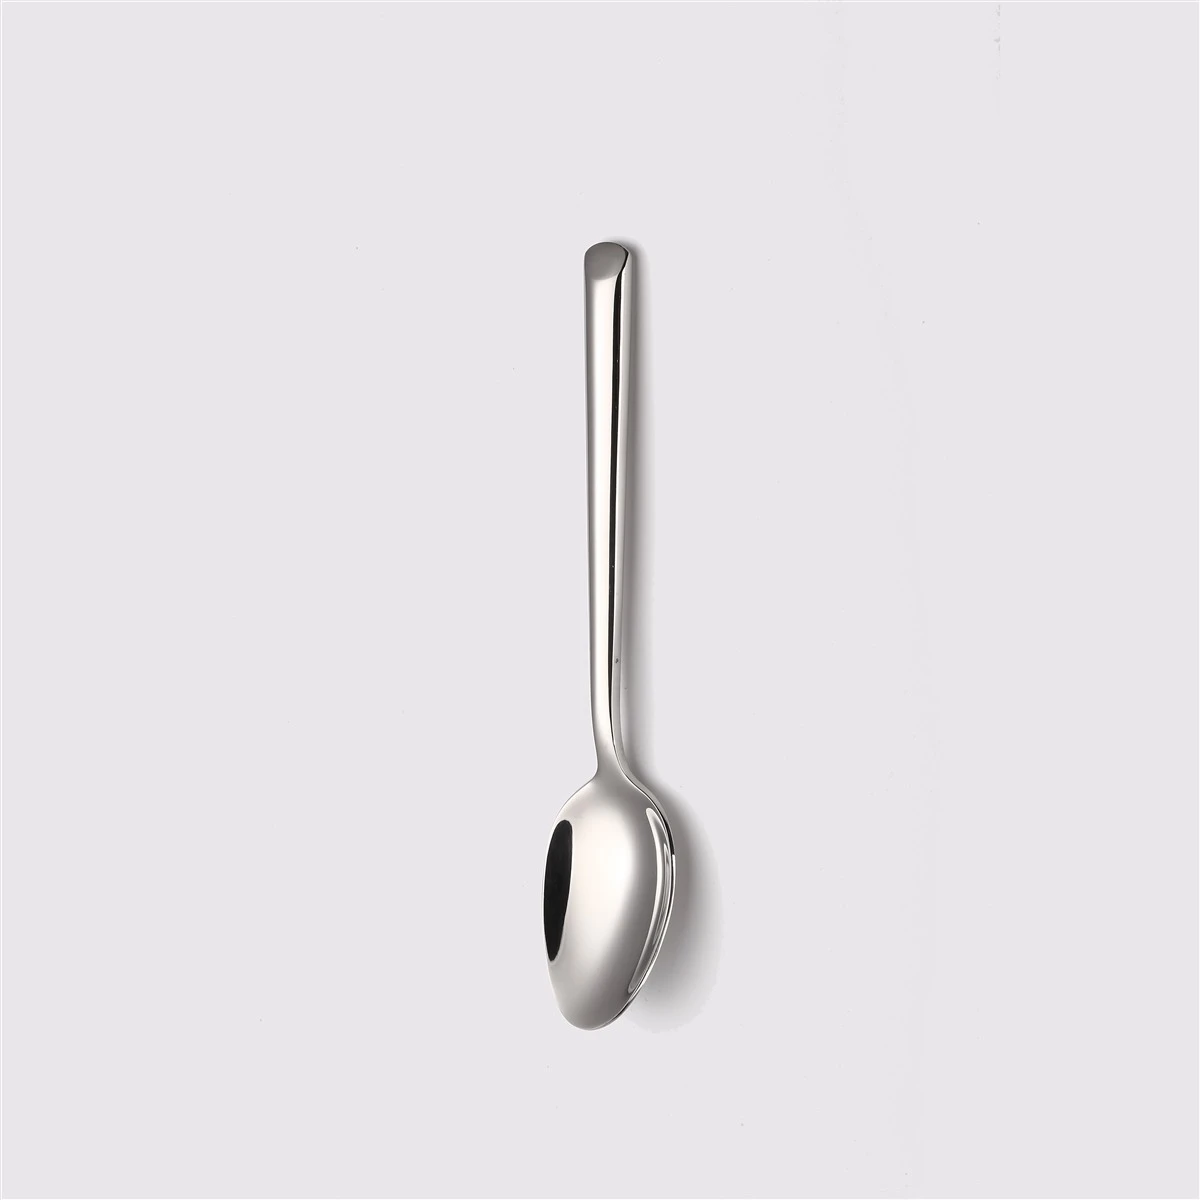 D026 Hongda Customized Design Flatware Cutlery Set 304 Stainless Steel Fork Knife Spoon